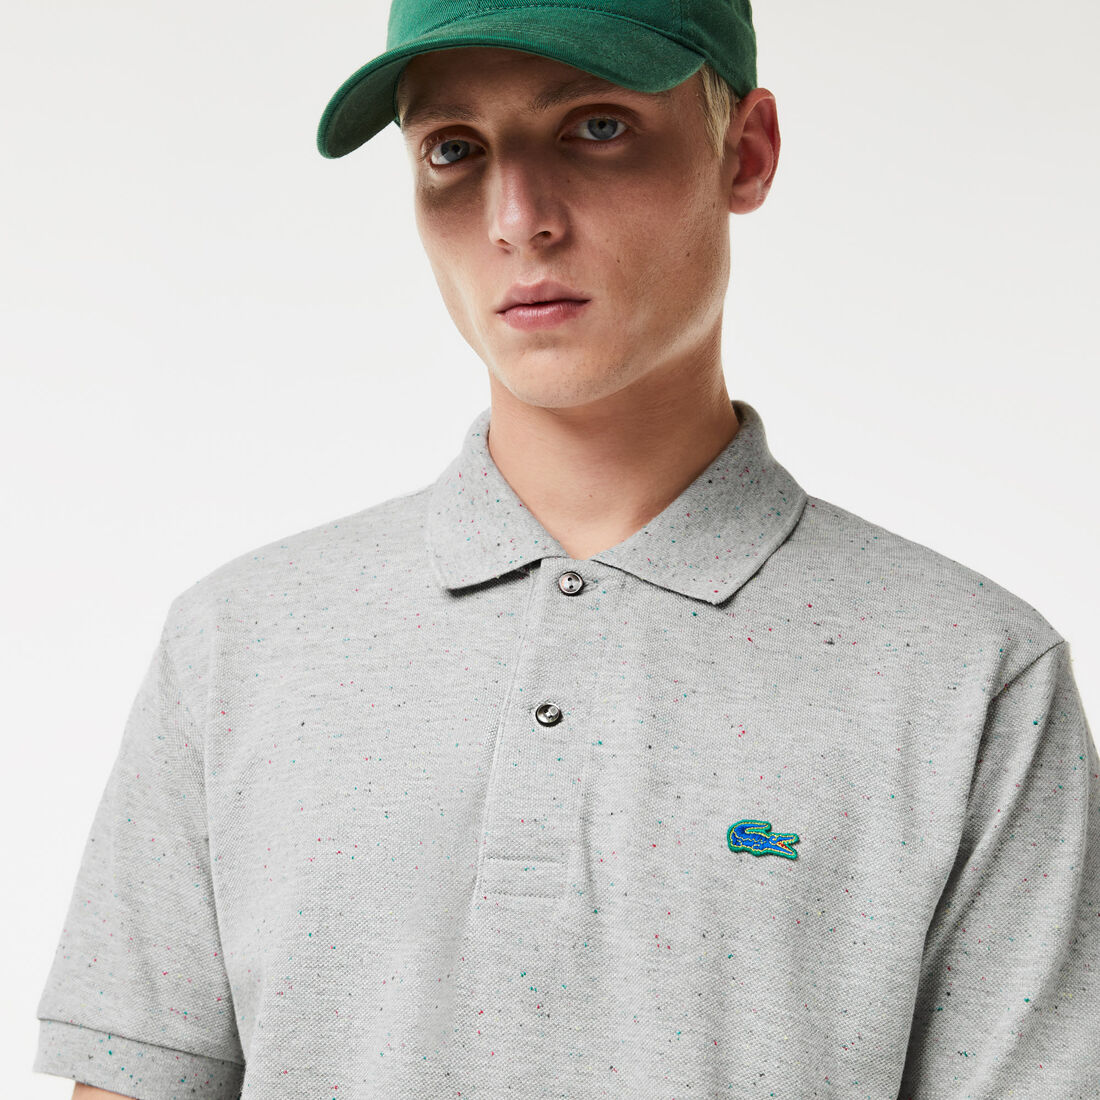 Lacoste Klassische Fit Speckled Print Baumwoll Piqué Polo Shirts Herren Grau | BFDS-40628